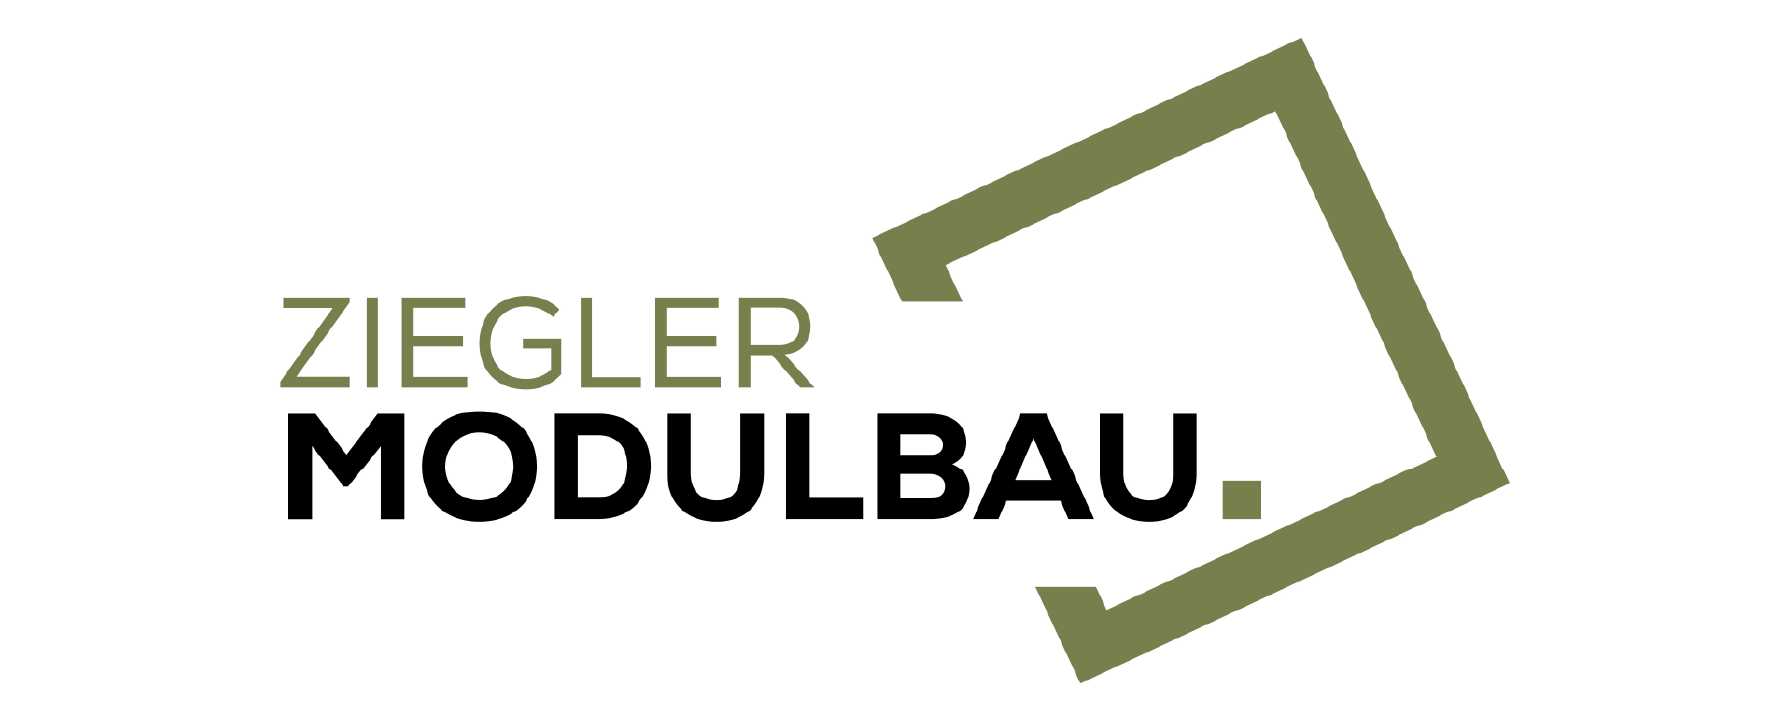 Ziegler Modulbau